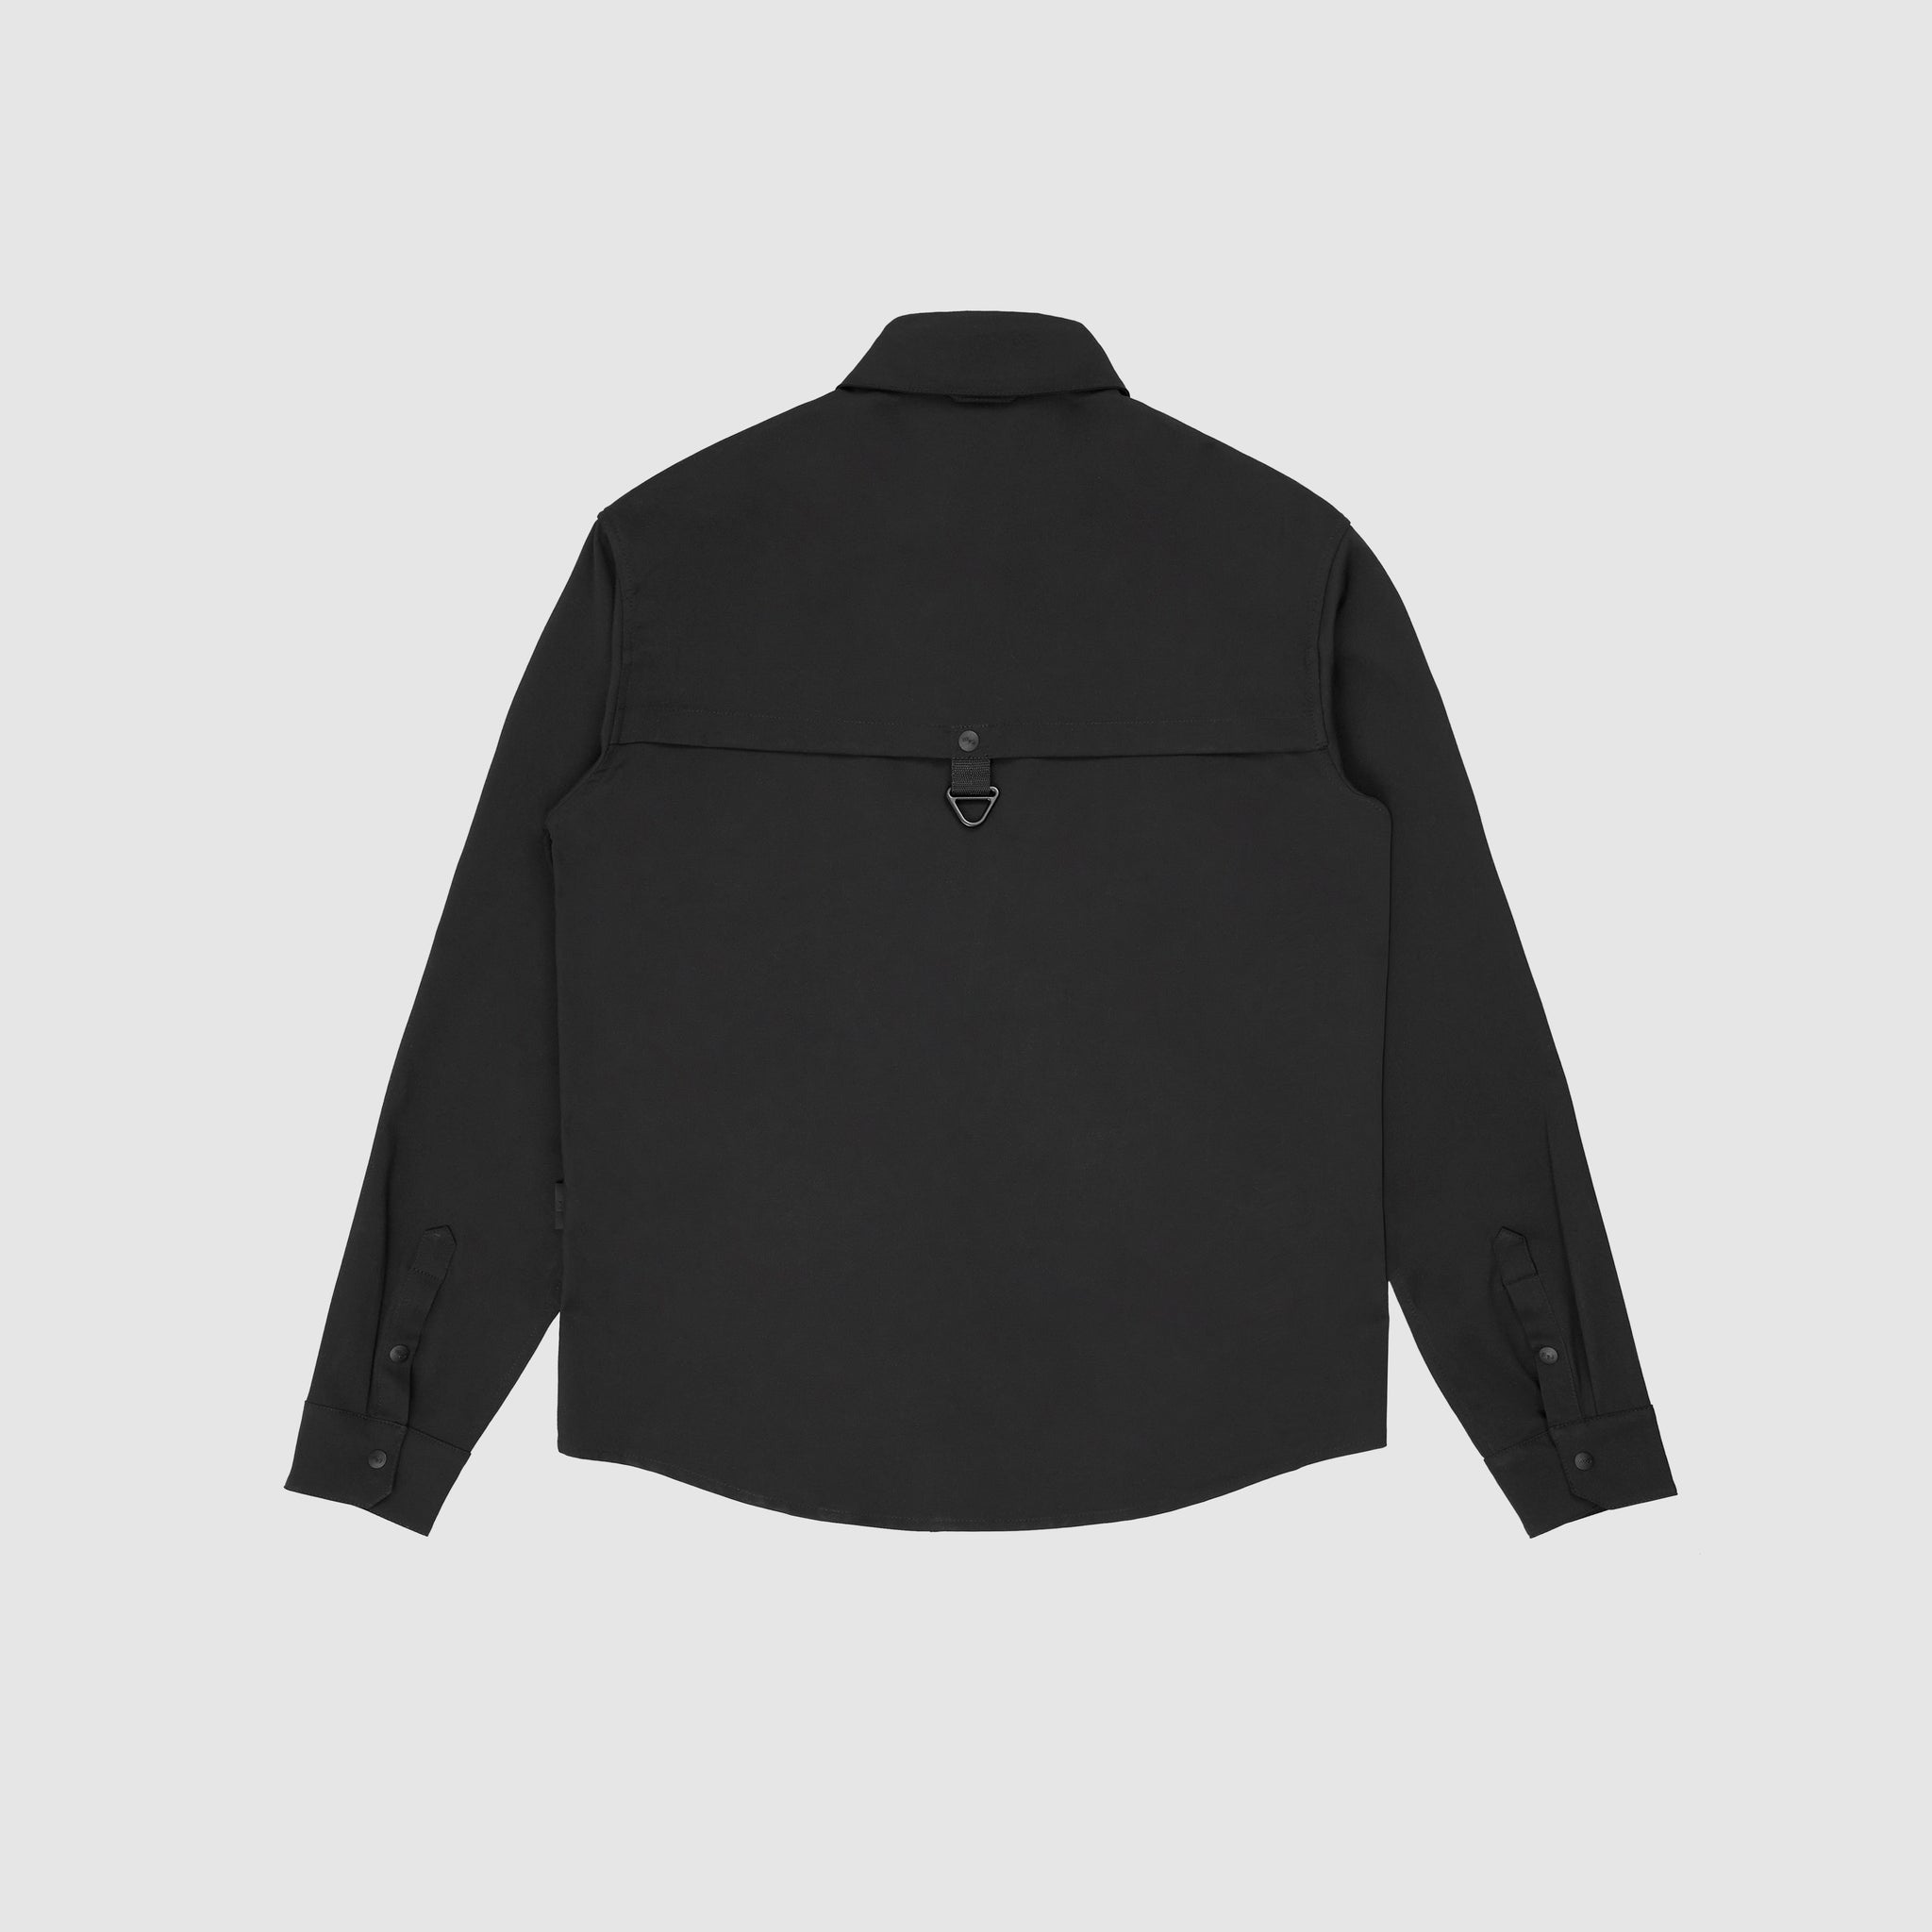 Hoffman Shirt- Black [Flexi-Shield]